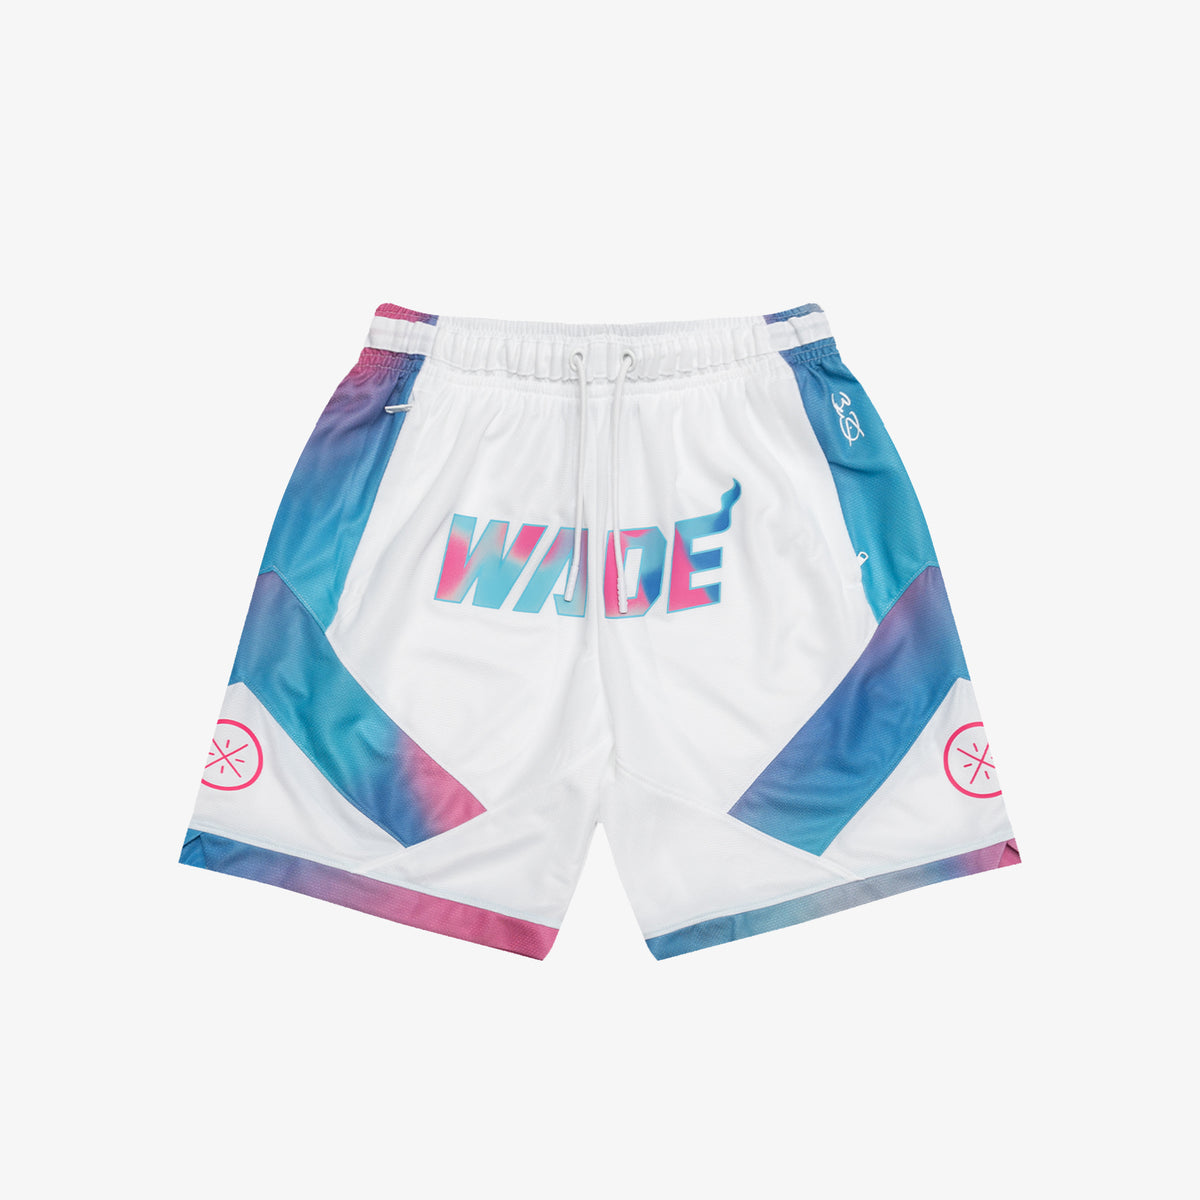 Wade Mesh Shorts - White